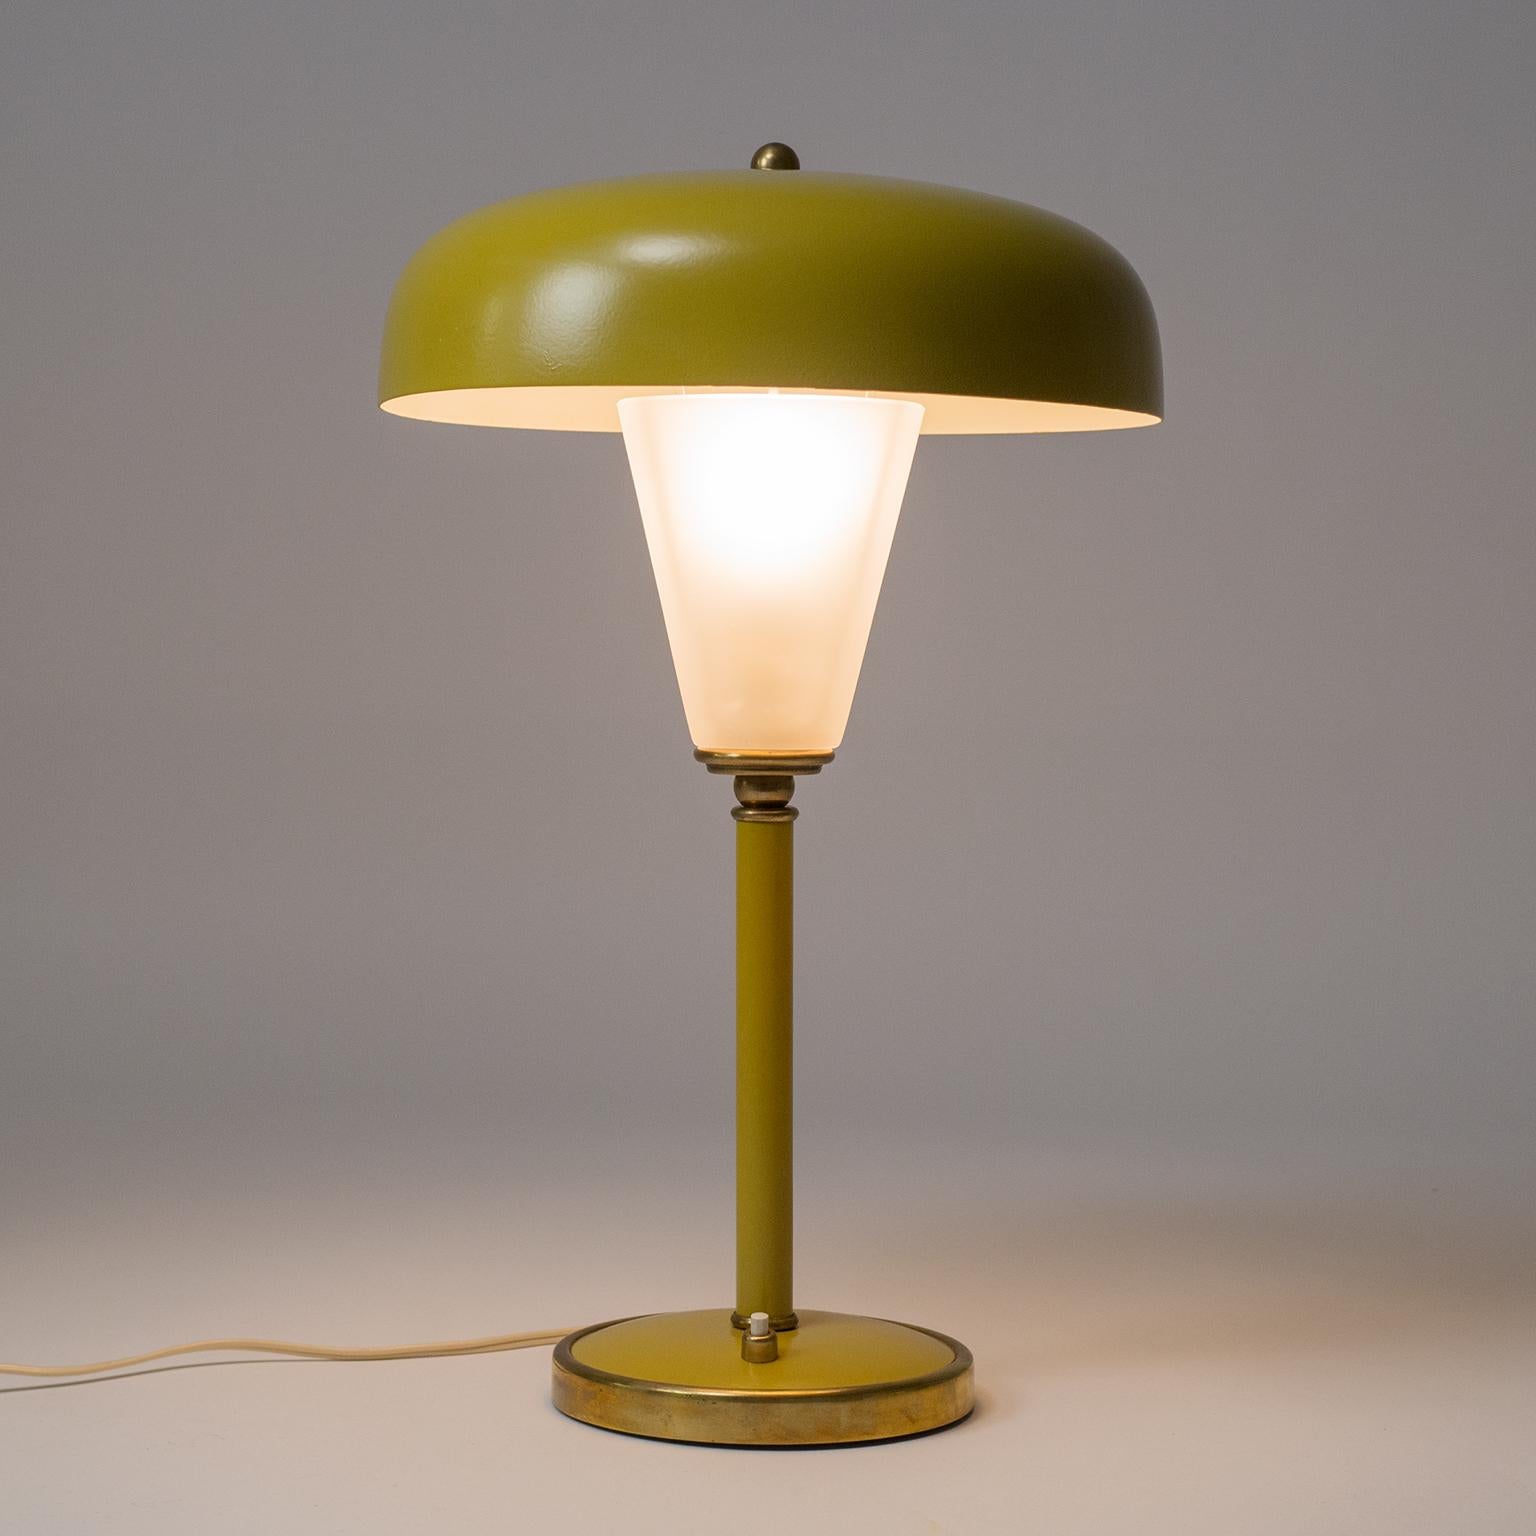 French Art Deco Lantern Table Lamp, 1940s (Lackiert)